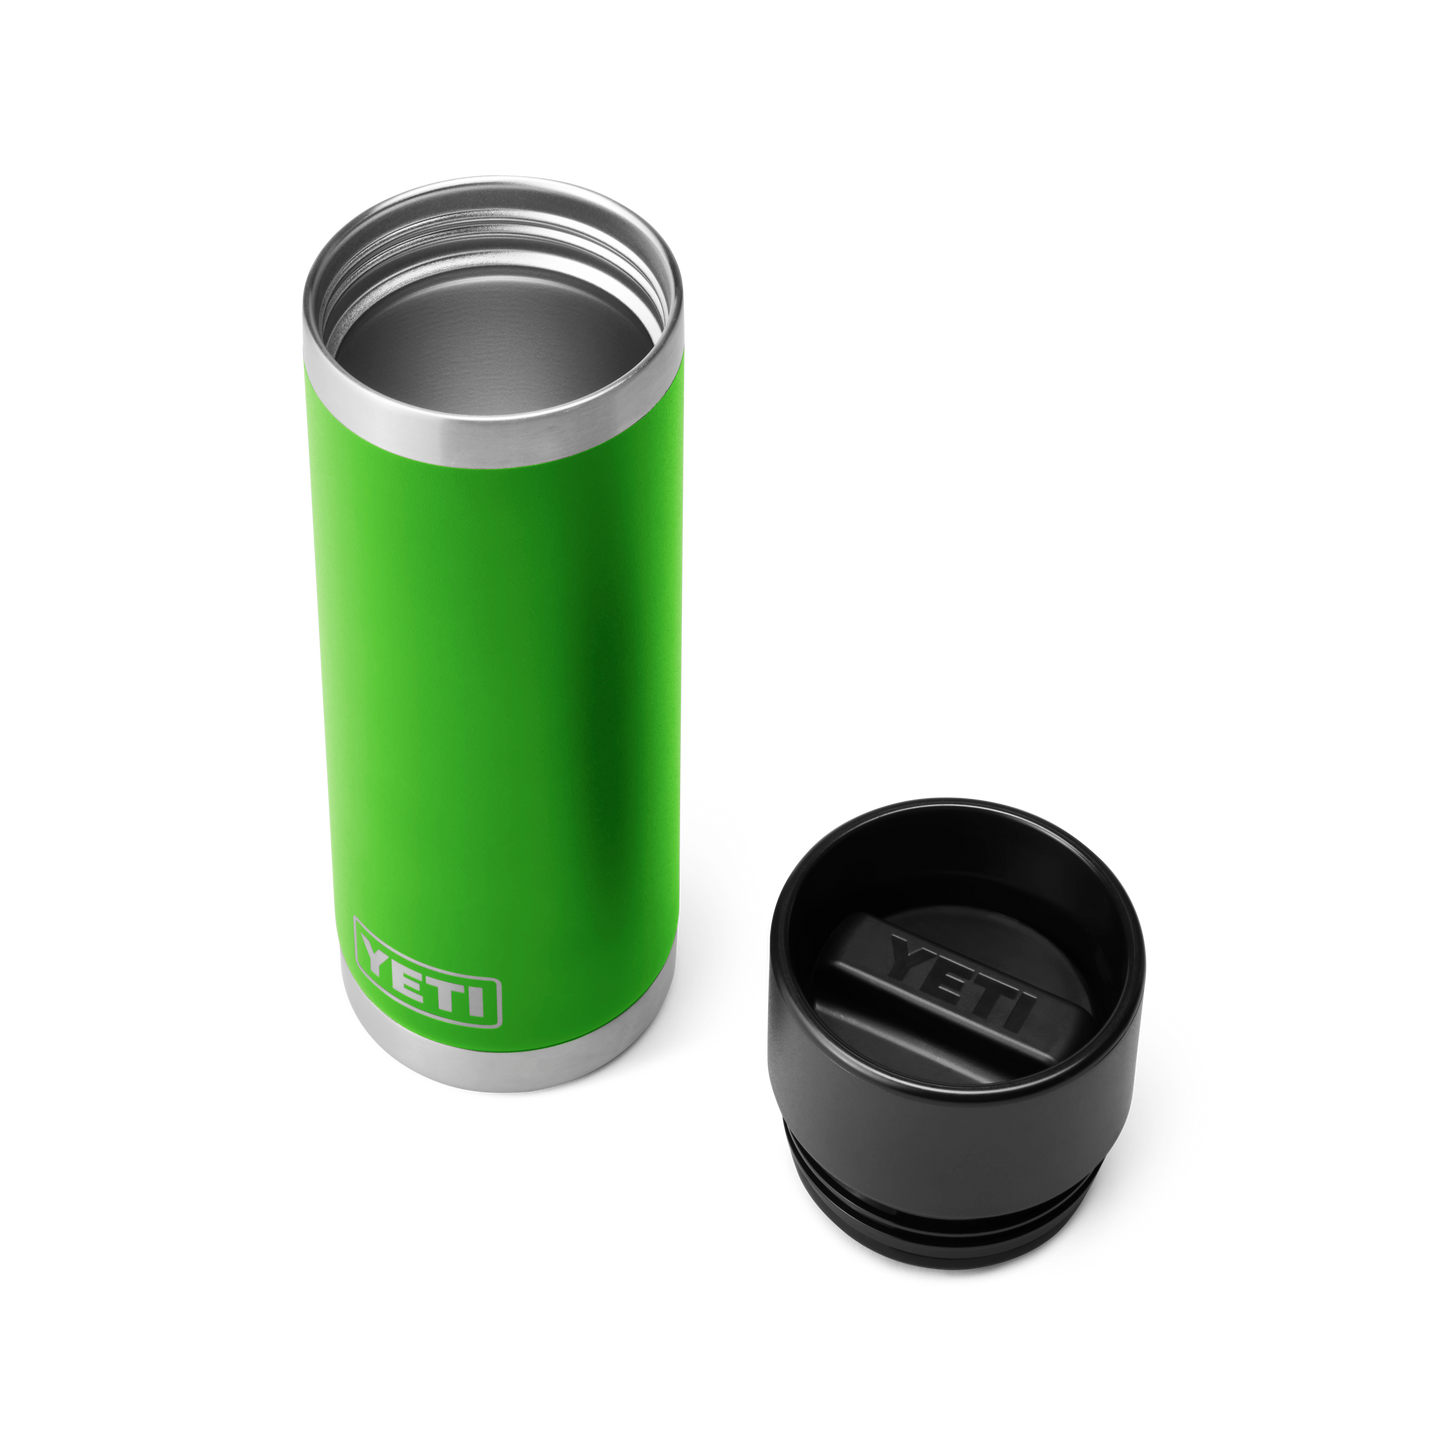 YETI Rambler® 18 oz (532 ml) Bottle With Hotshot Cap Canopy Green